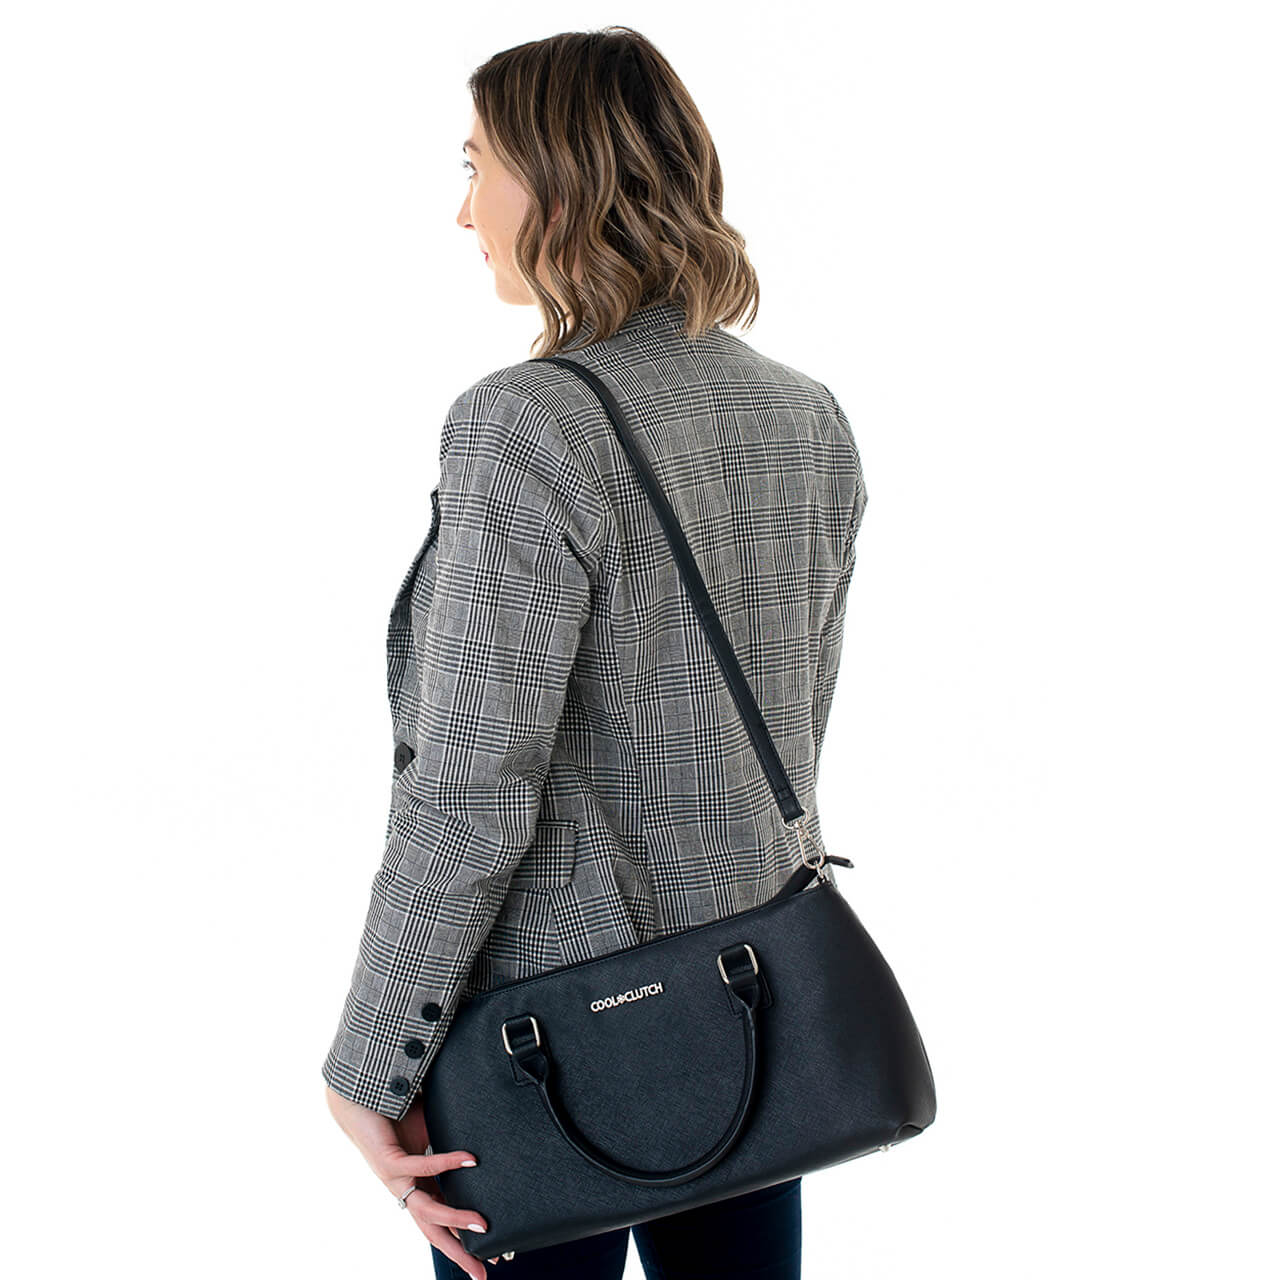 Amy Cool Clutch (Black) Cooler bags - Cool Clutch cooler bag handbag insulated wine lunch handbags